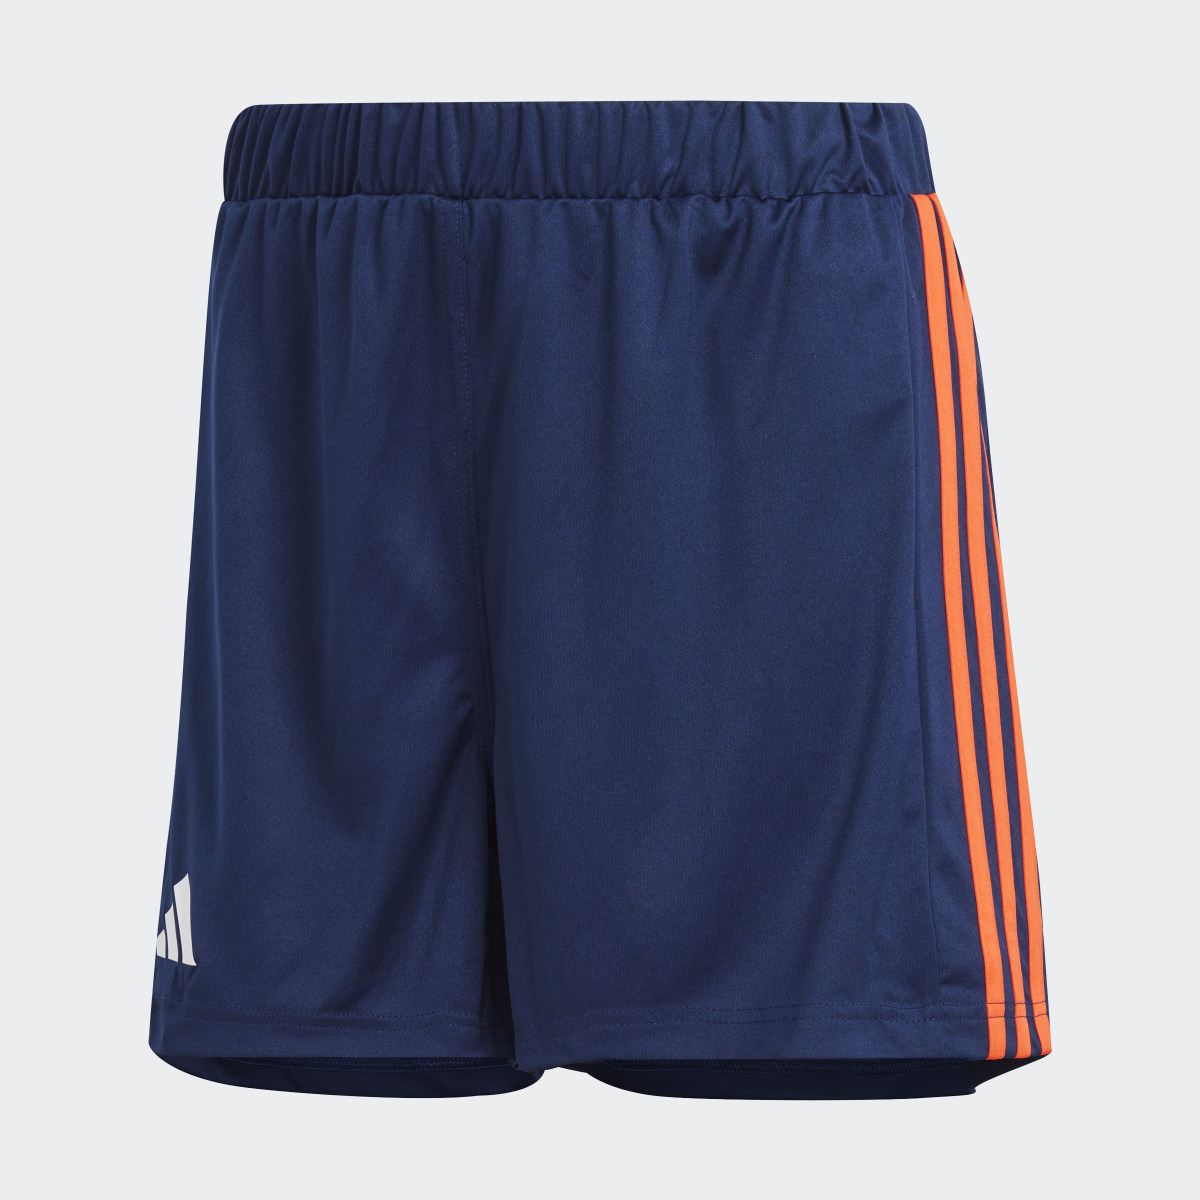 Adidas France Handball Shorts. 4